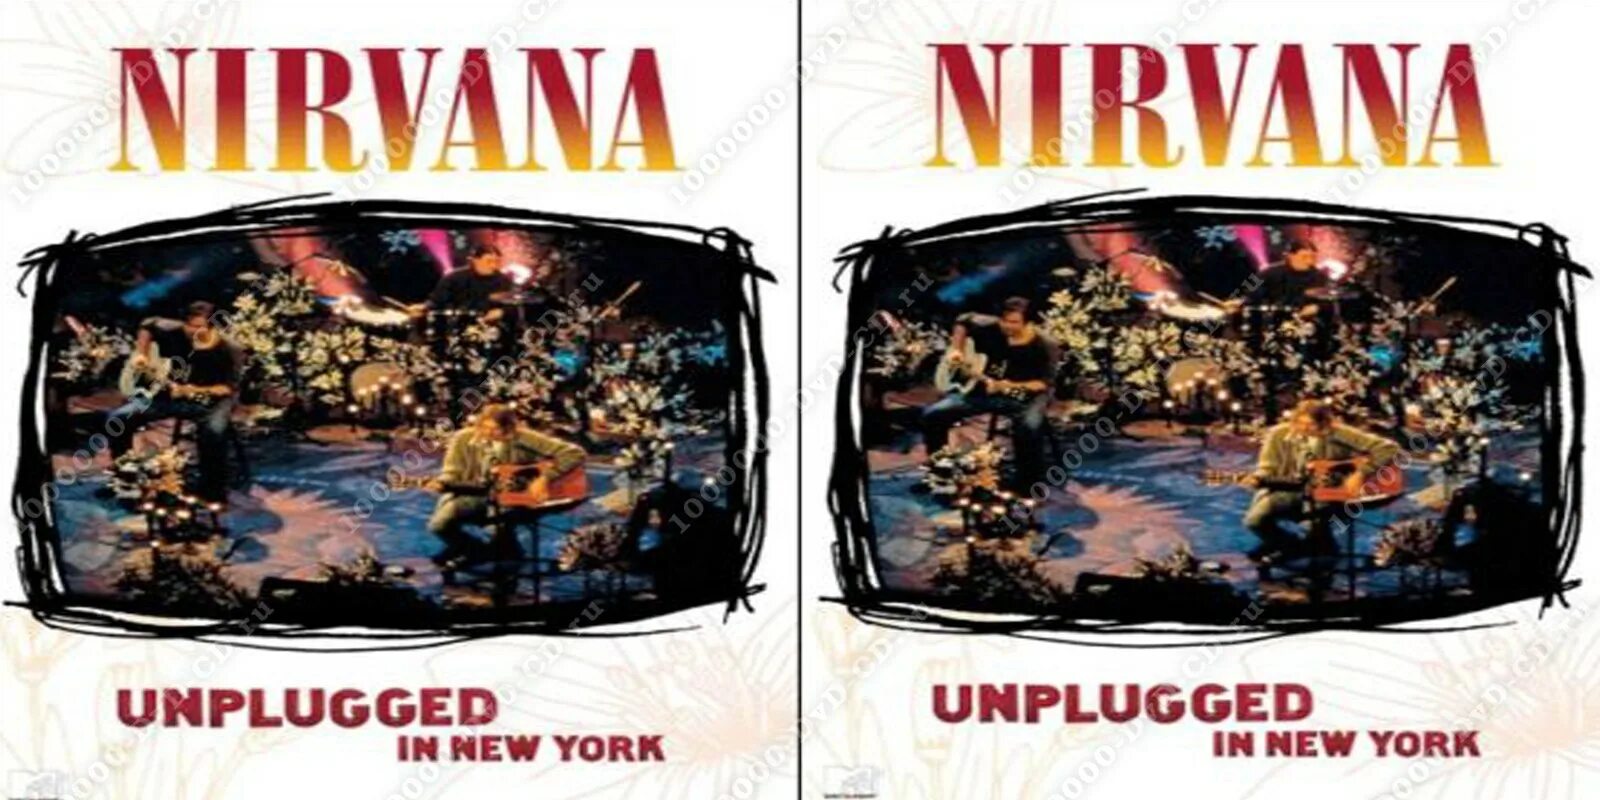 Nirvana unplugged in new. MTV Unplugged Nirvana 1994. Nirvana Unplugged in New York 1994. Nirvana MTV Unplugged in New York обложка. DVD Nirvana - Unplugged in New York.